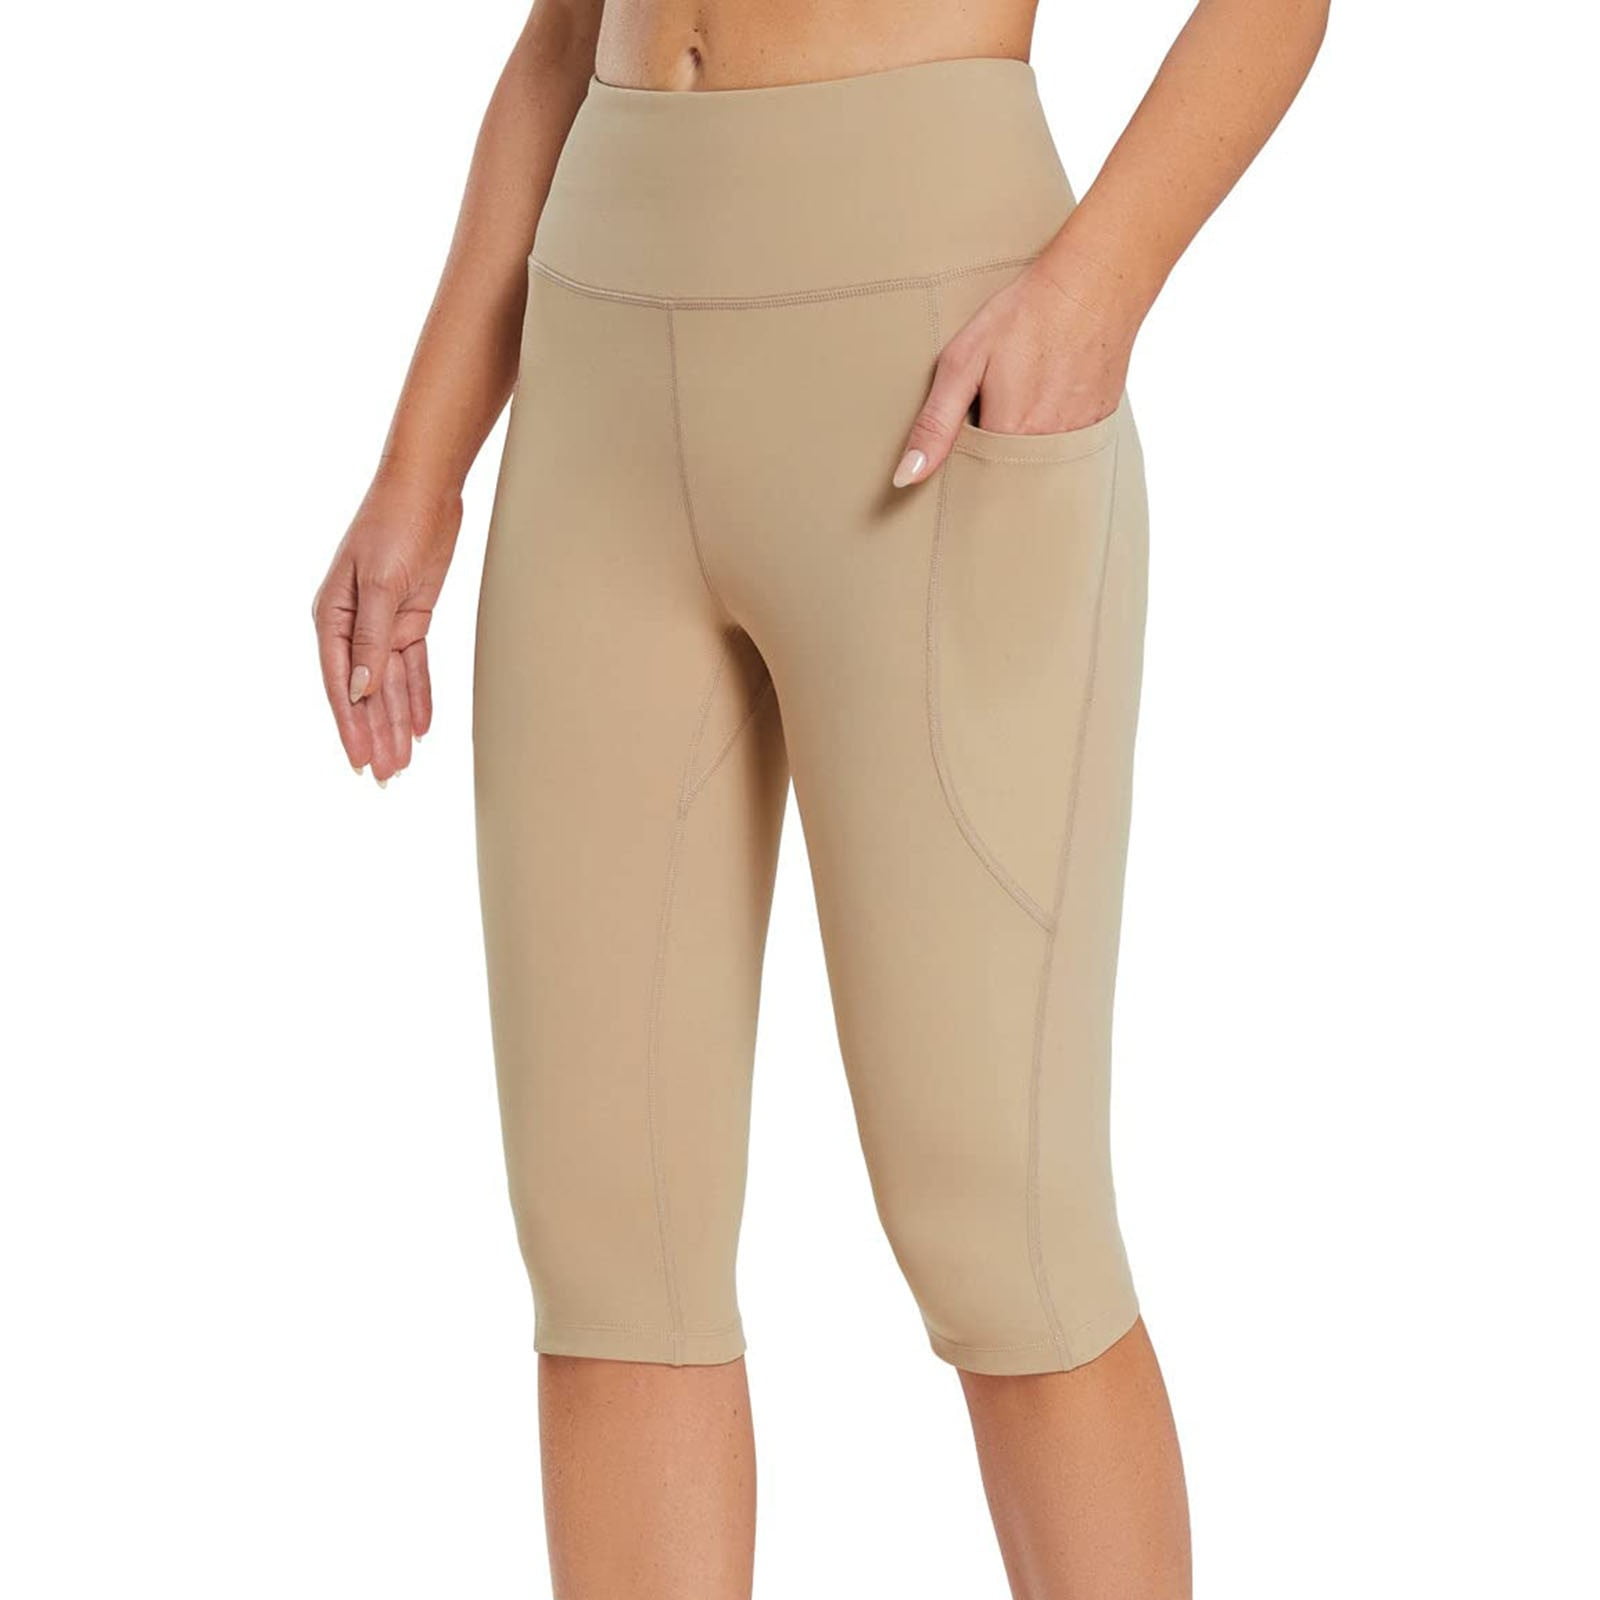 Zenana Capri Leggings Knee Pants Premium Cotton Spandex Basic STORE CLOSING  | eBay